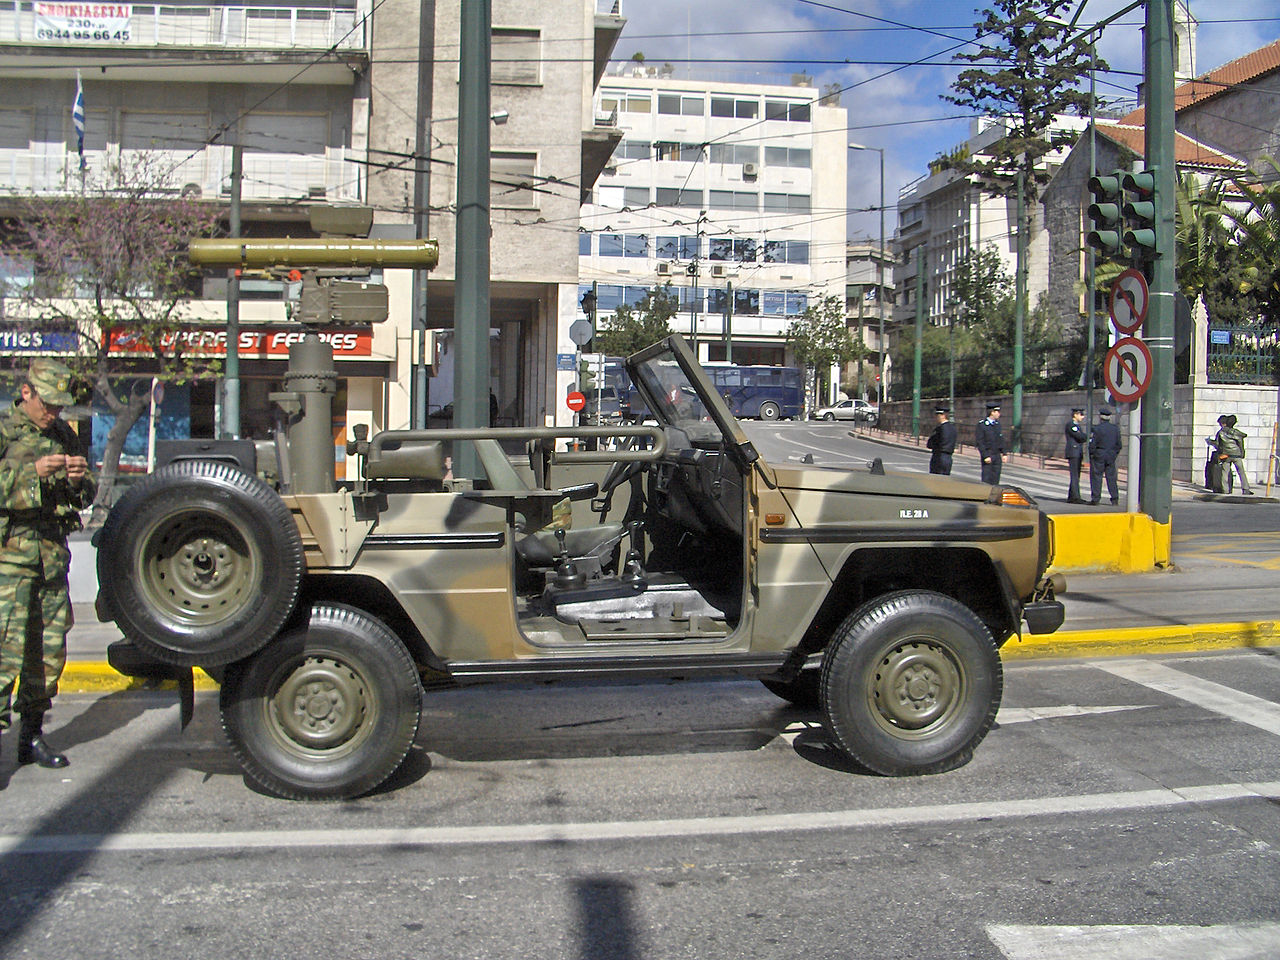 PU 9P135 mounted on the vehicle